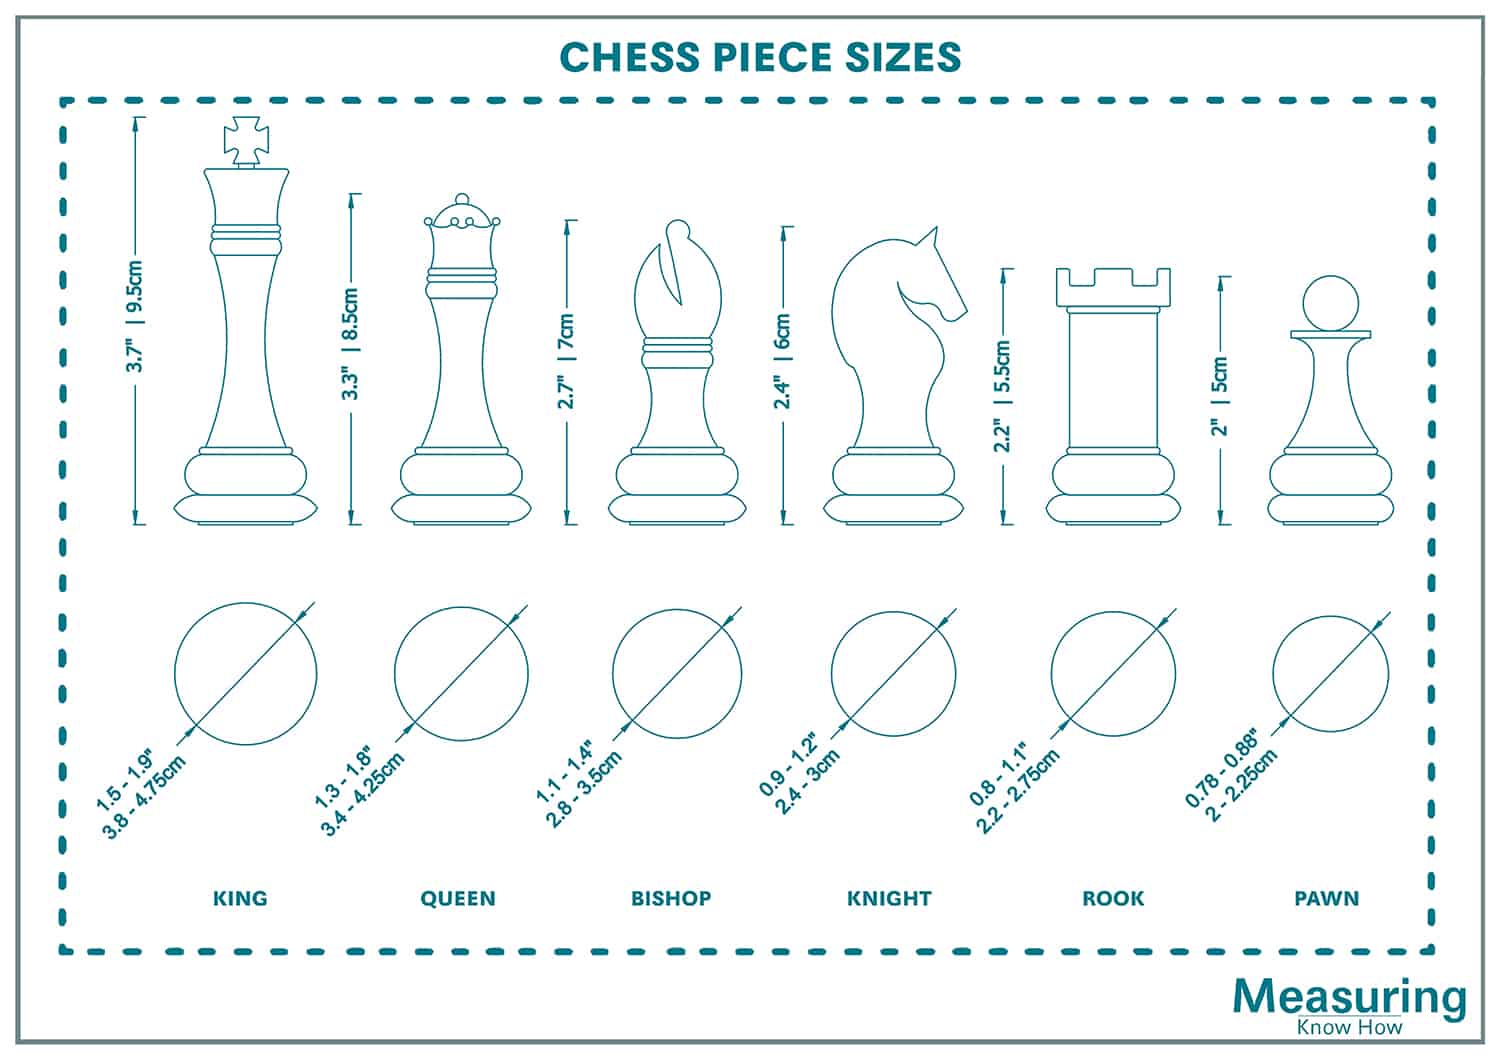 Chess piece sizes